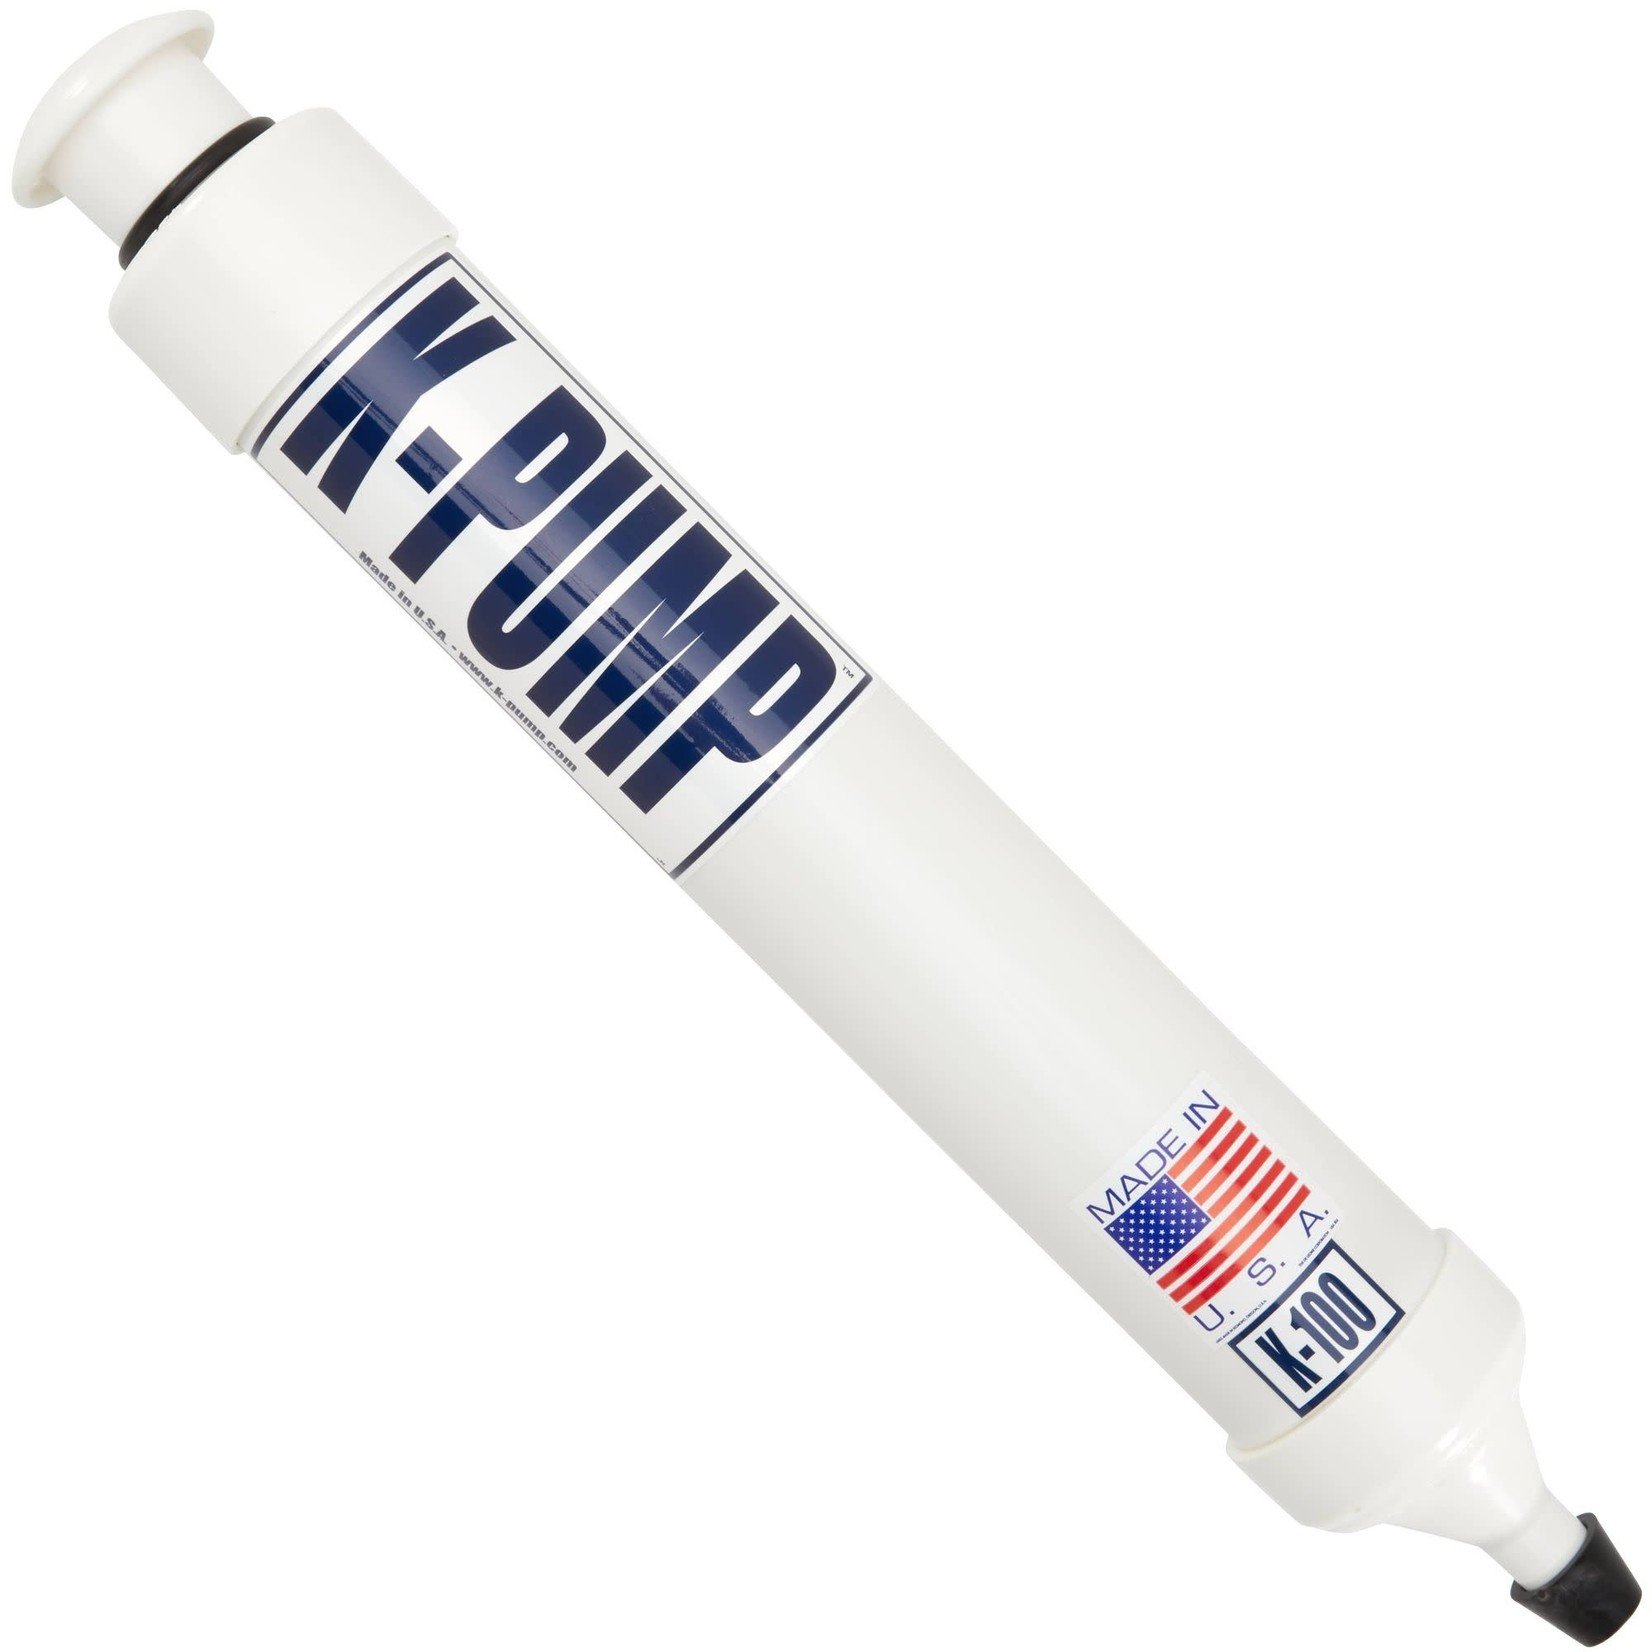 Kpump K-Pump 100 Standard Pump White